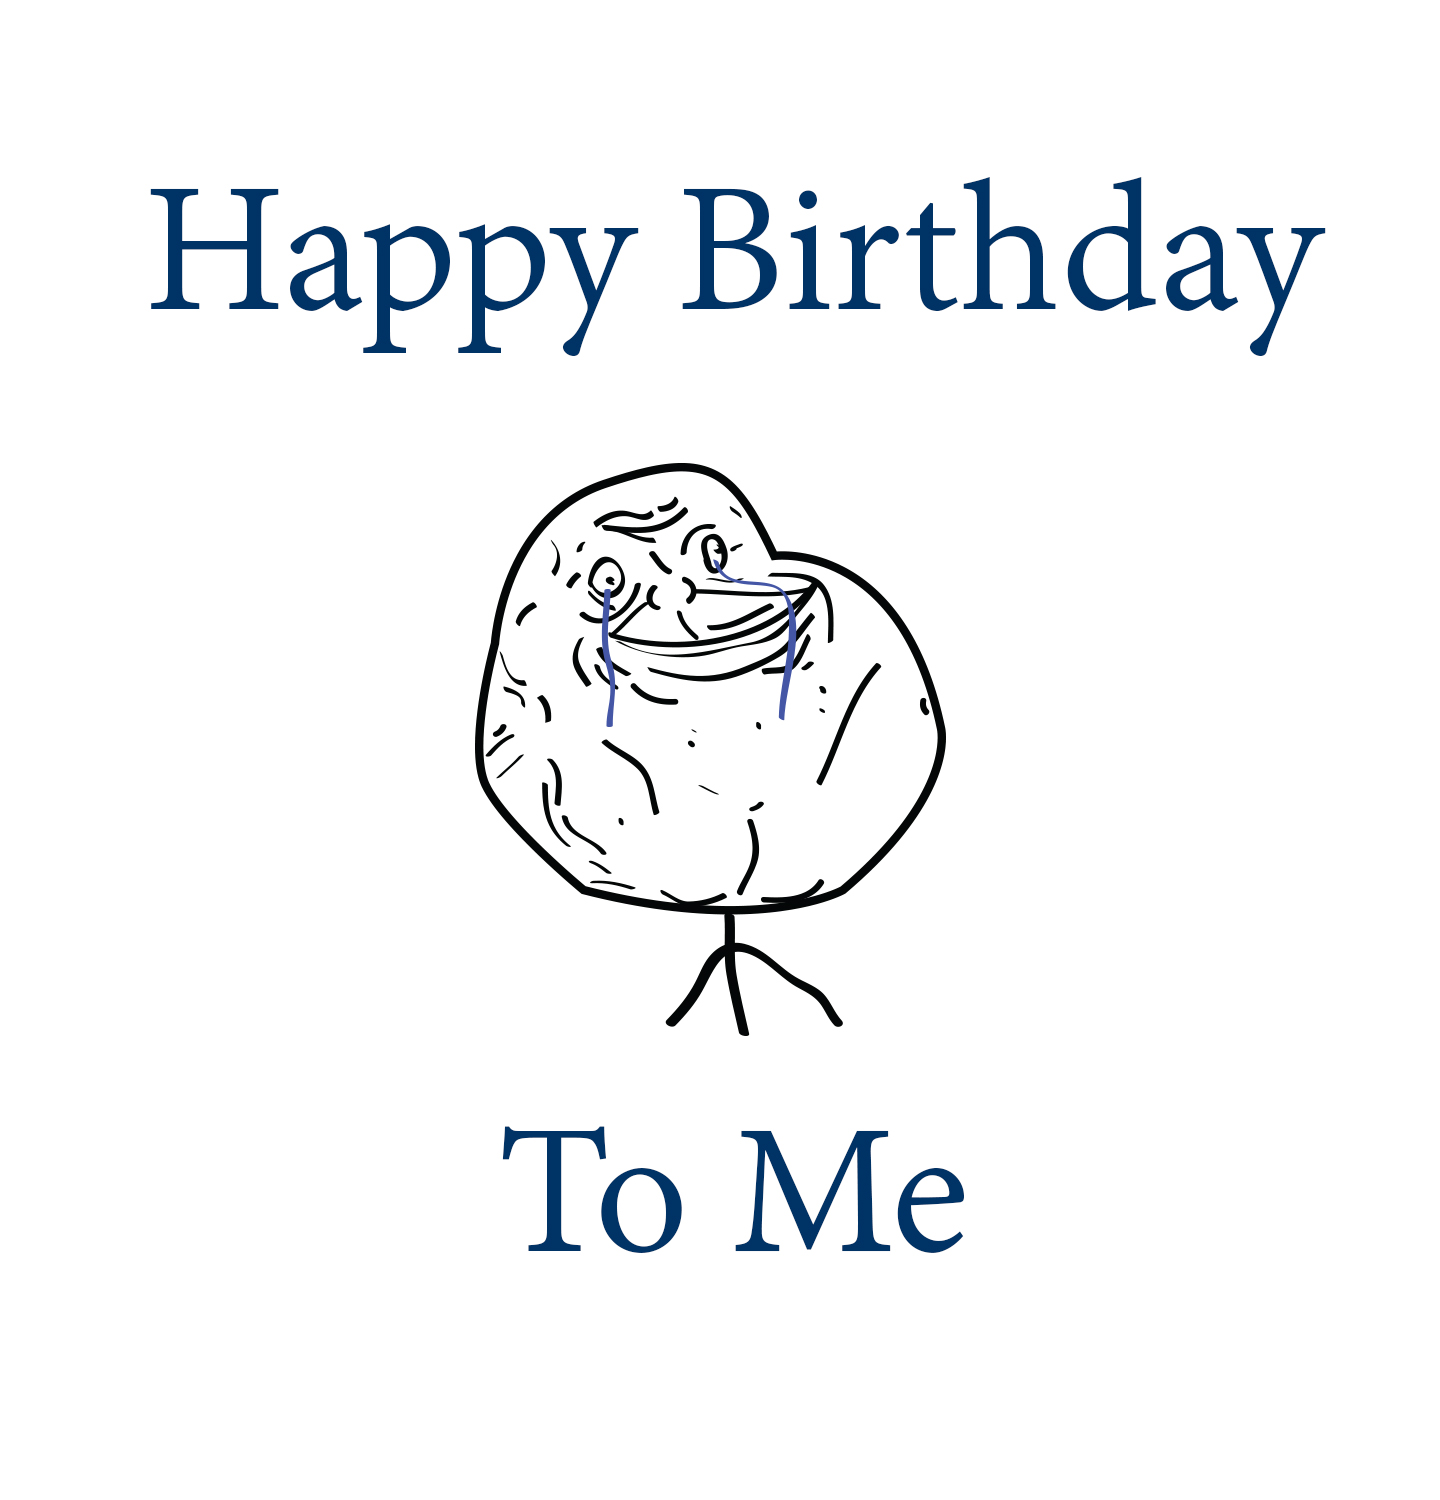 Happy Birthday To Me Meme, My Blog. 